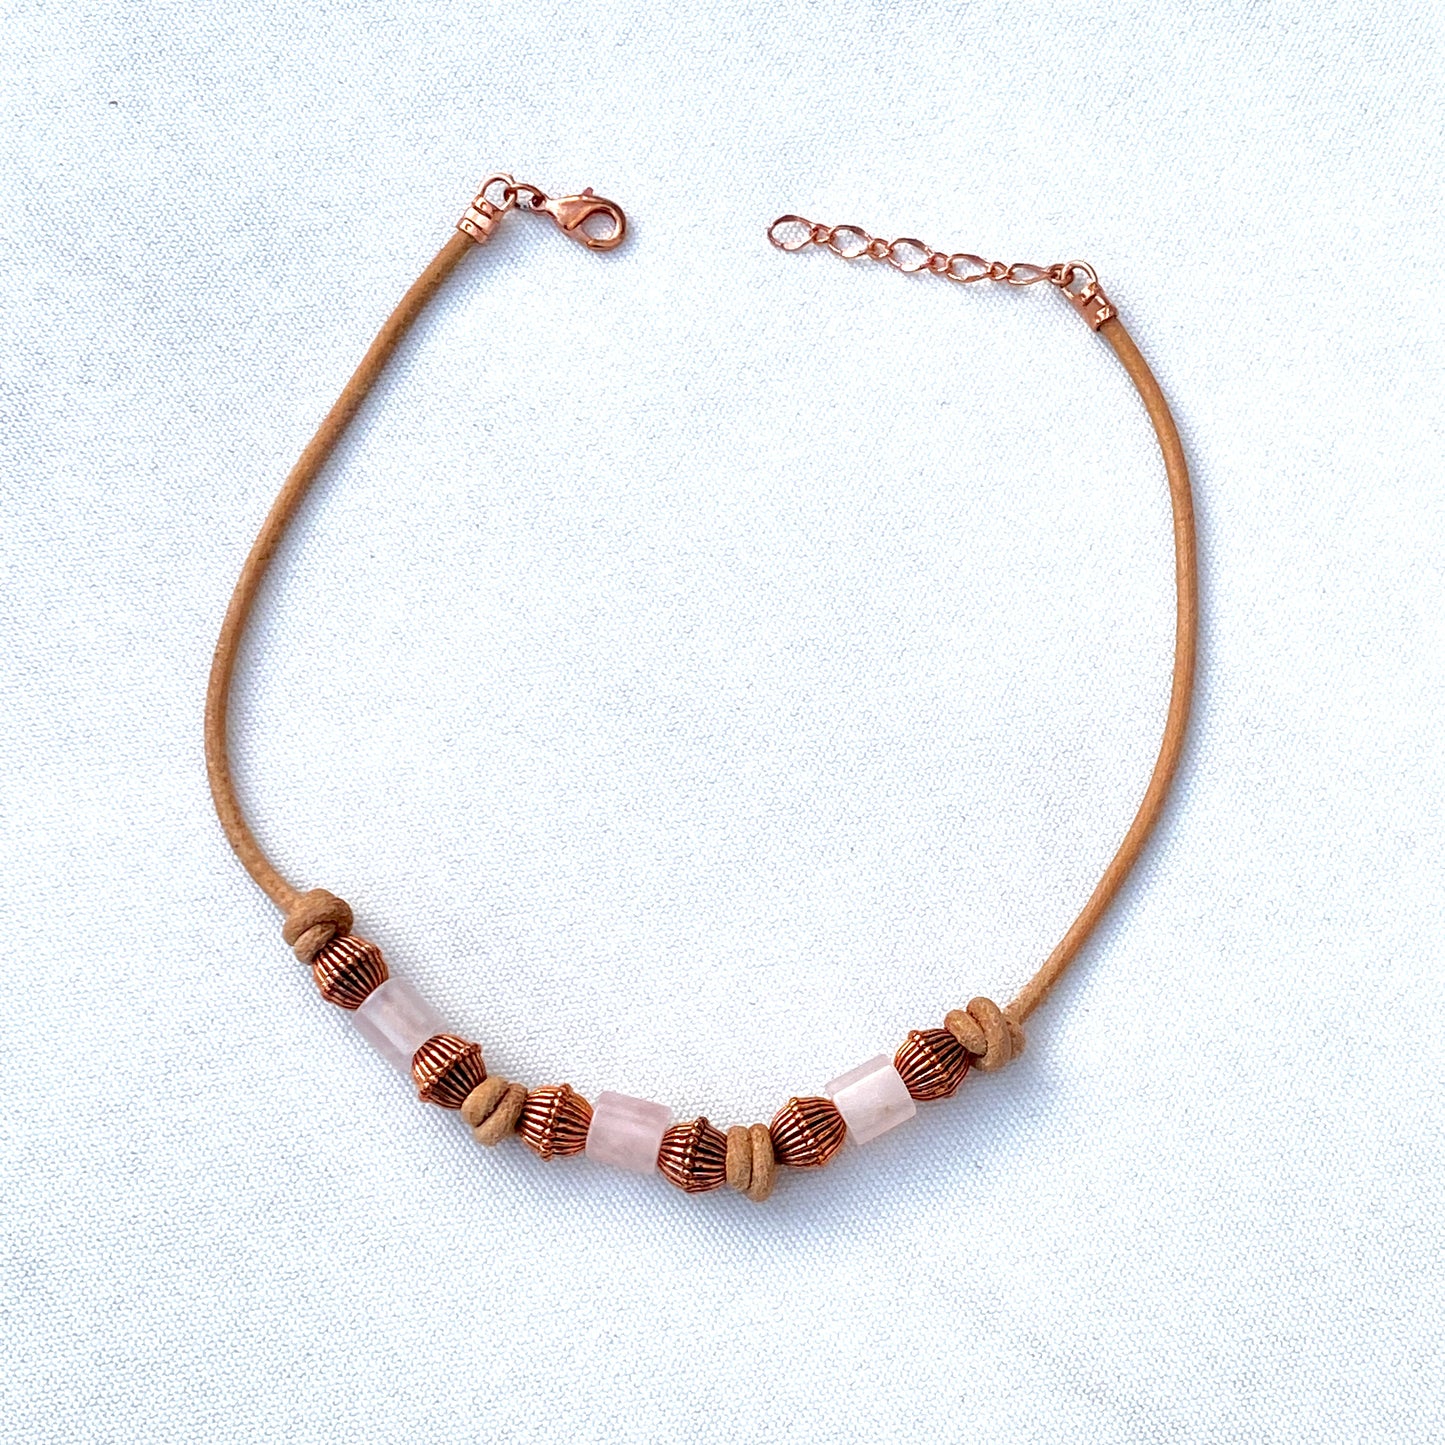 Rose Quartz gemstone and copper leather necklace